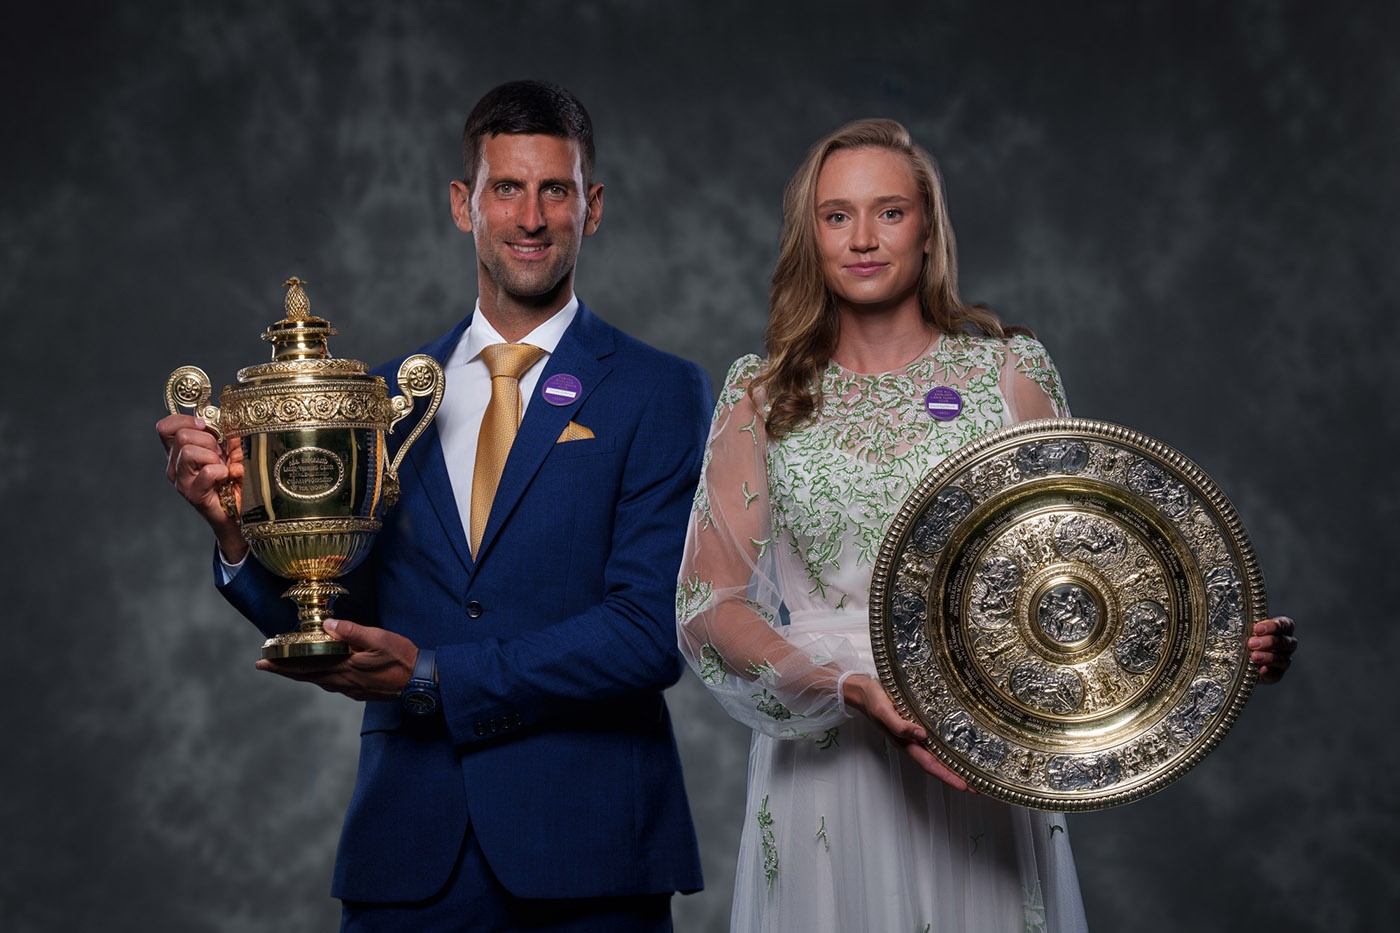 The 2022 Wimbledon Champions Dinner